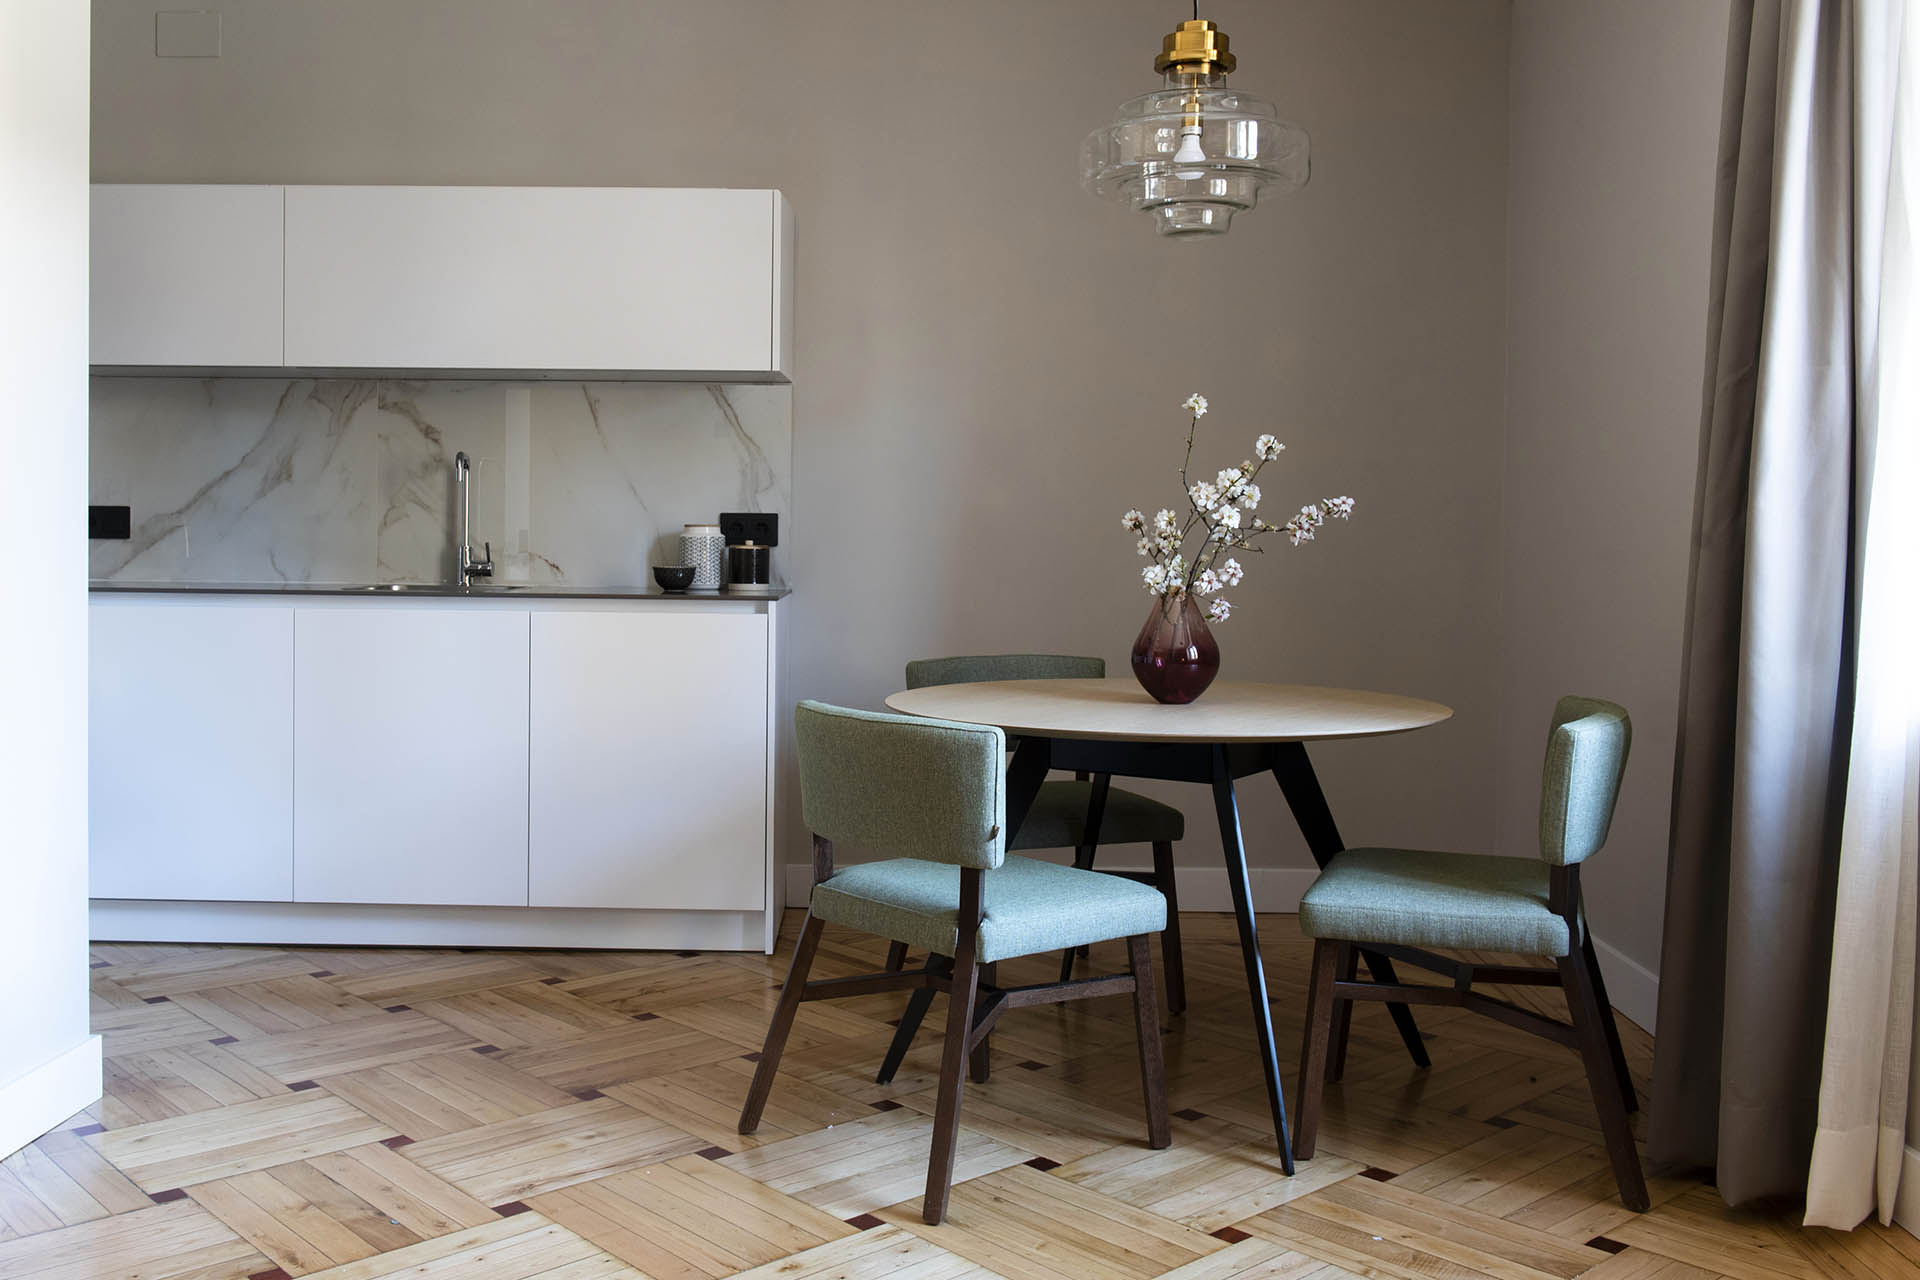 Santos kitchens in tourist apartments, by the designer Ana Montarelo